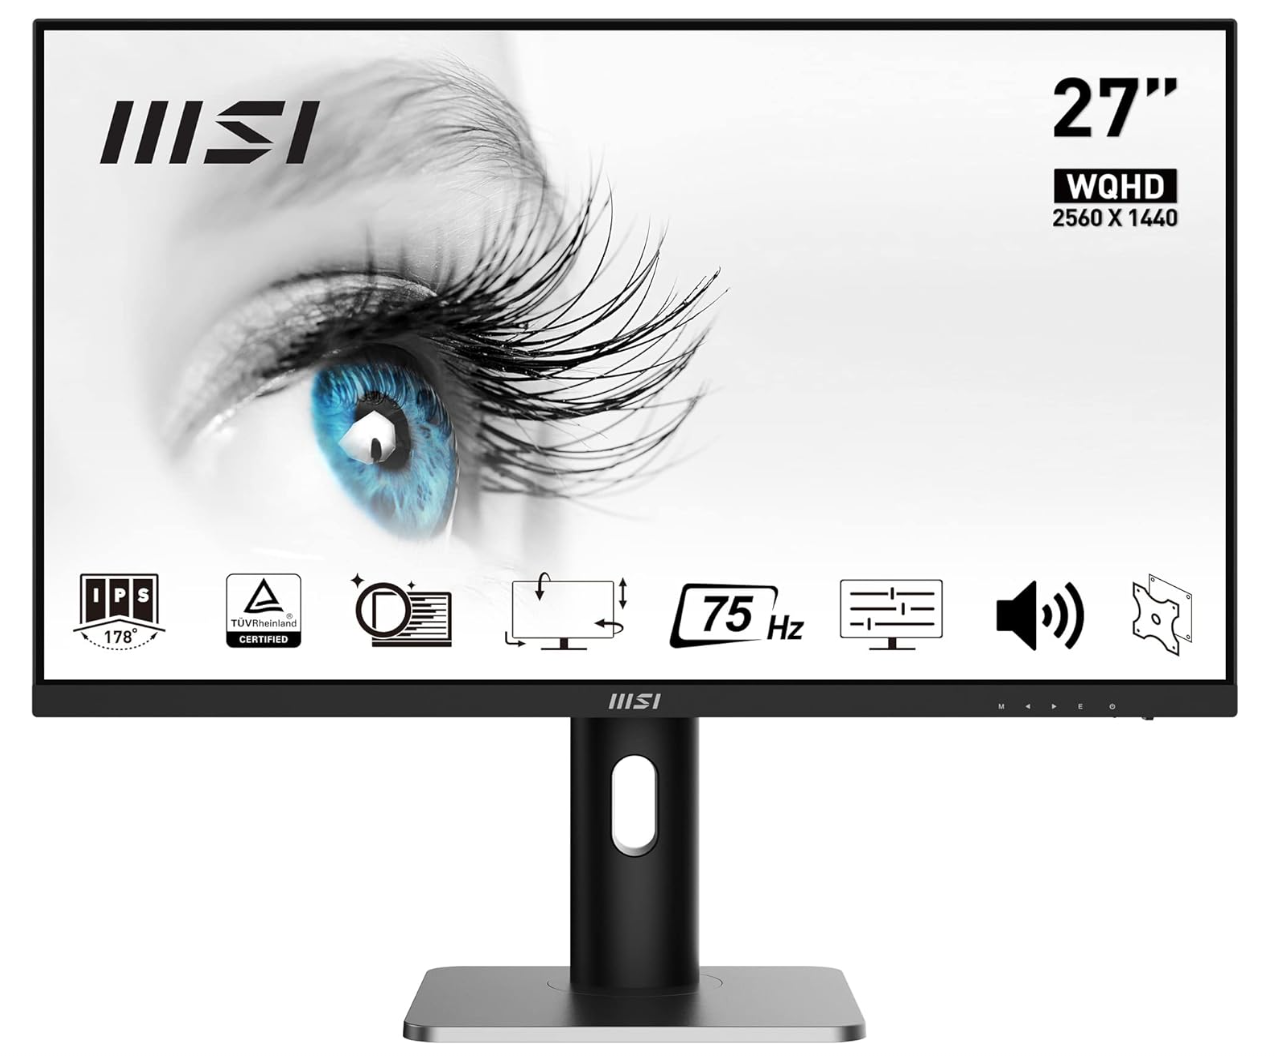 MSI PRO MP273QPDE IPS LED Monitor (27 Zoll, WQHD, 2560×1440@75Hz) bei Amazon